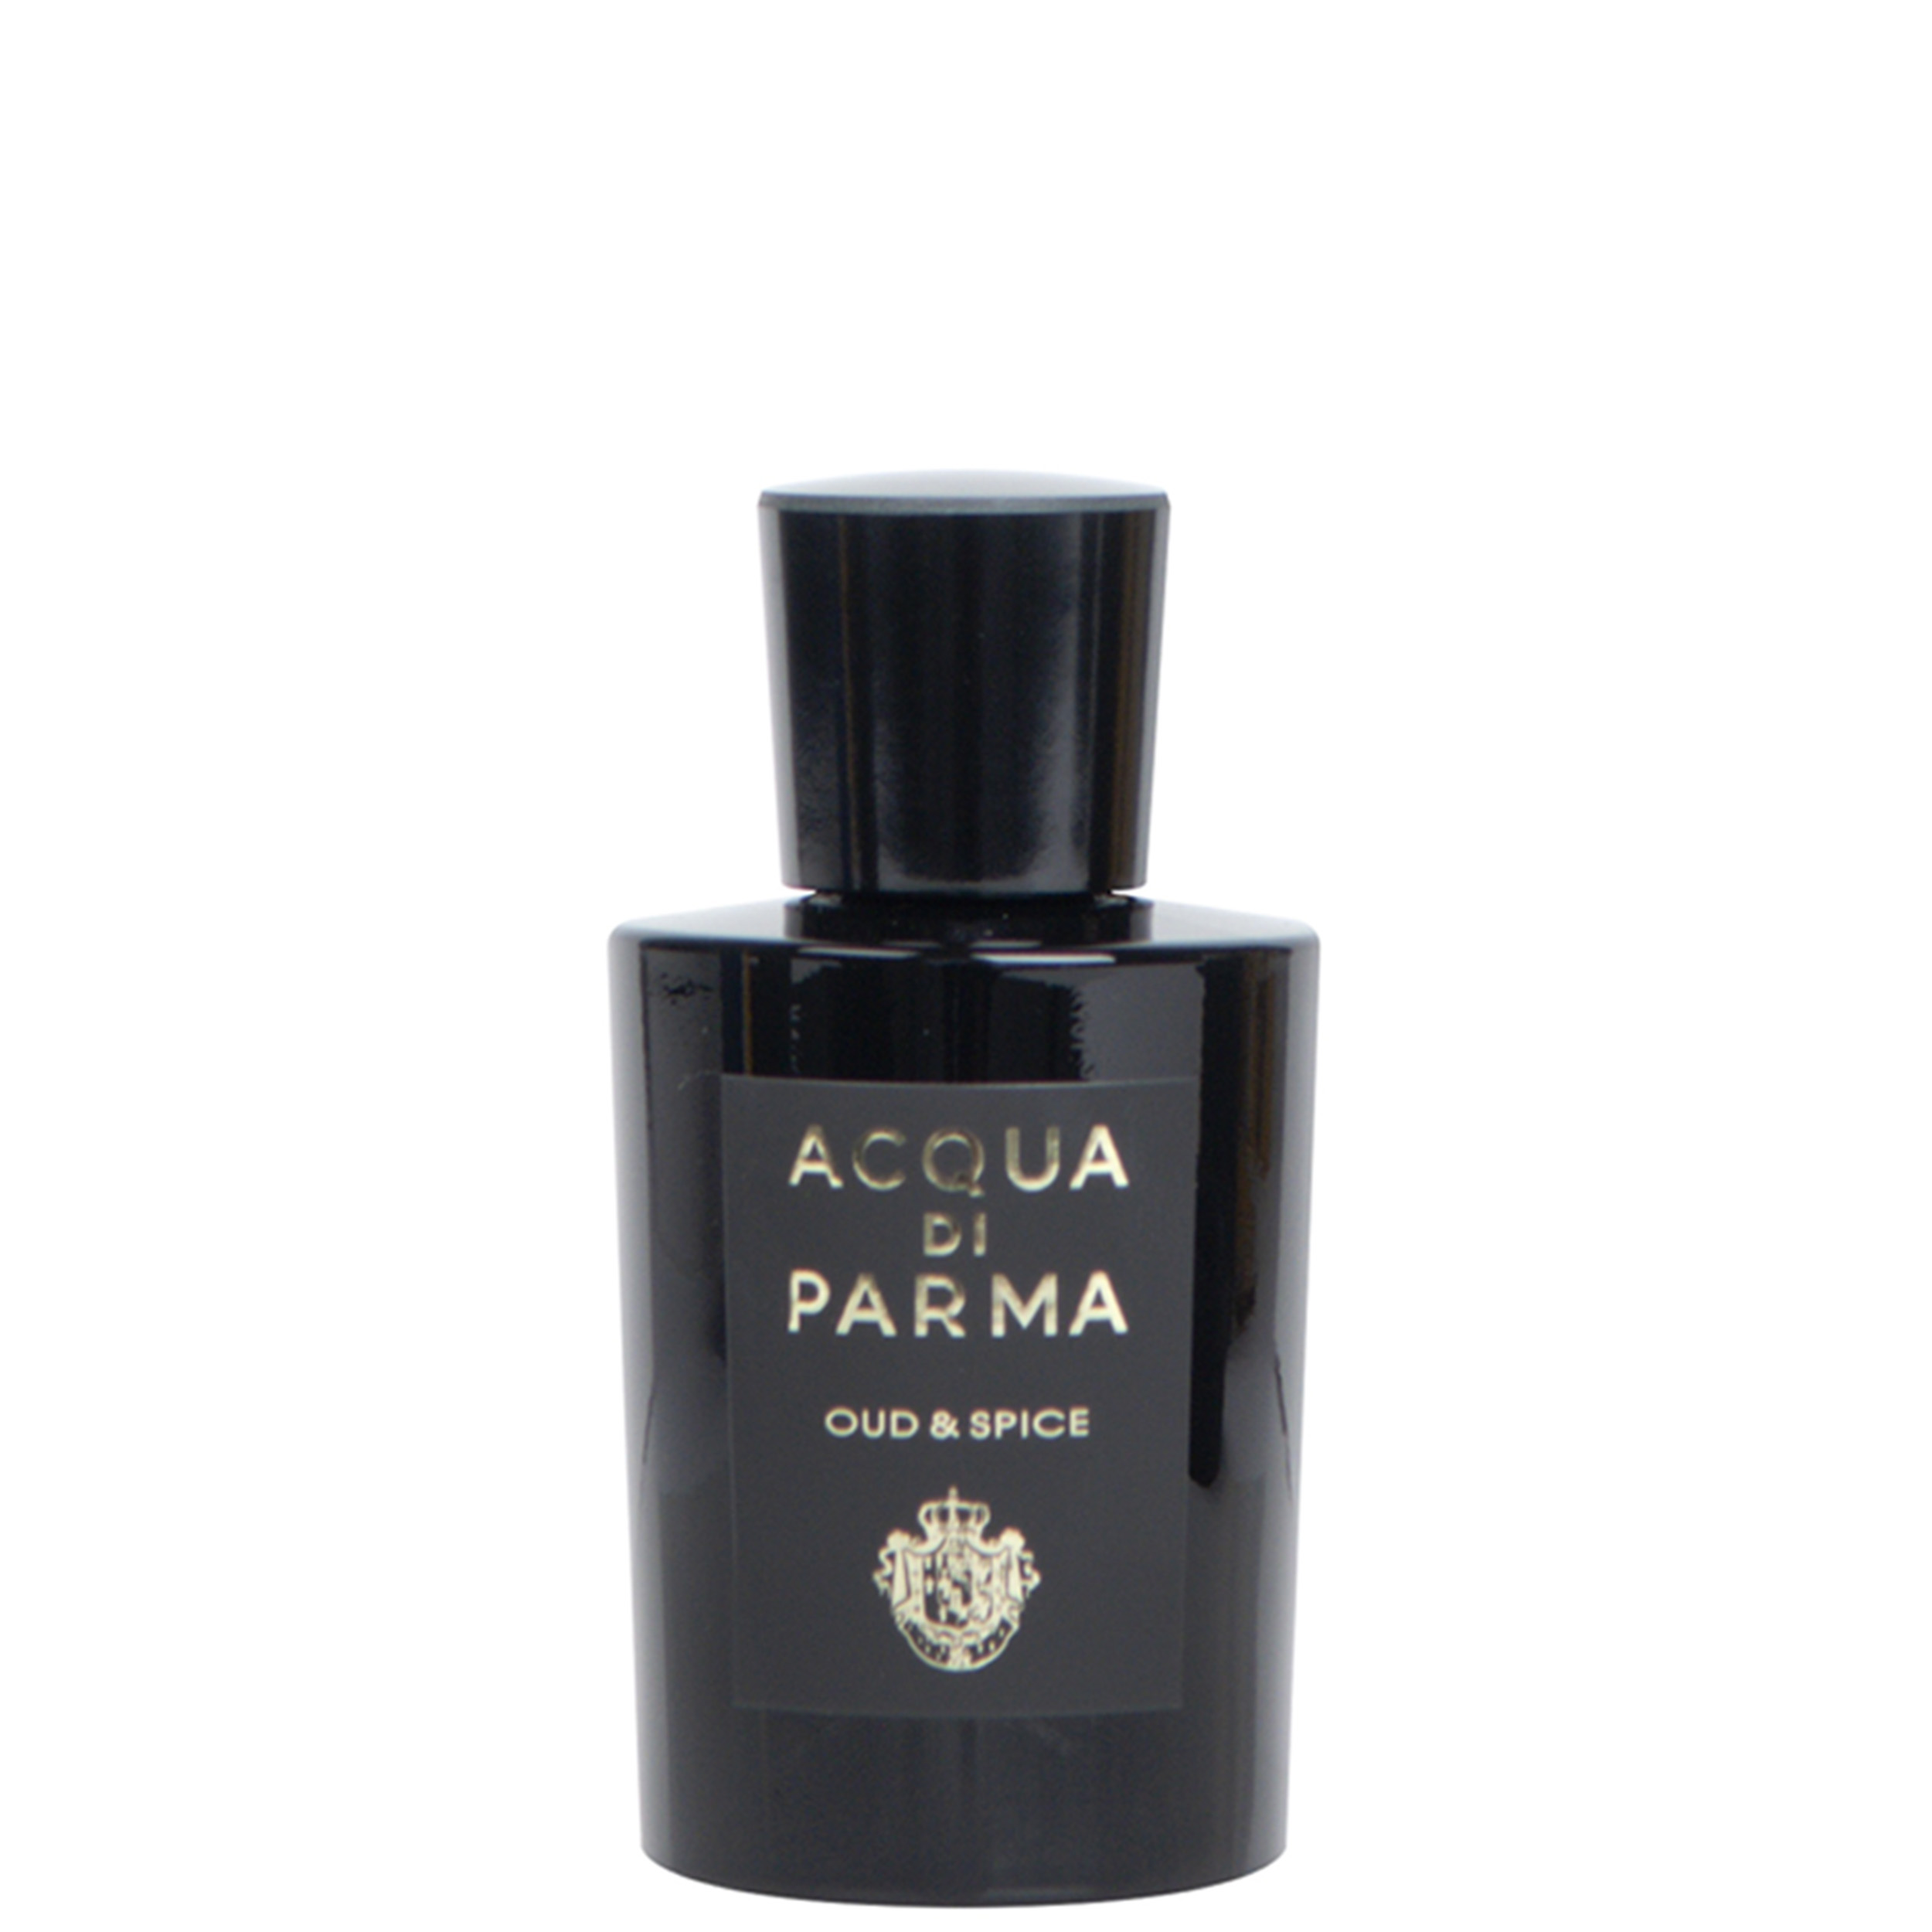 Acqua Di Parma ’Oud And Spice’ 180ml EDP Concentrate Fragrance